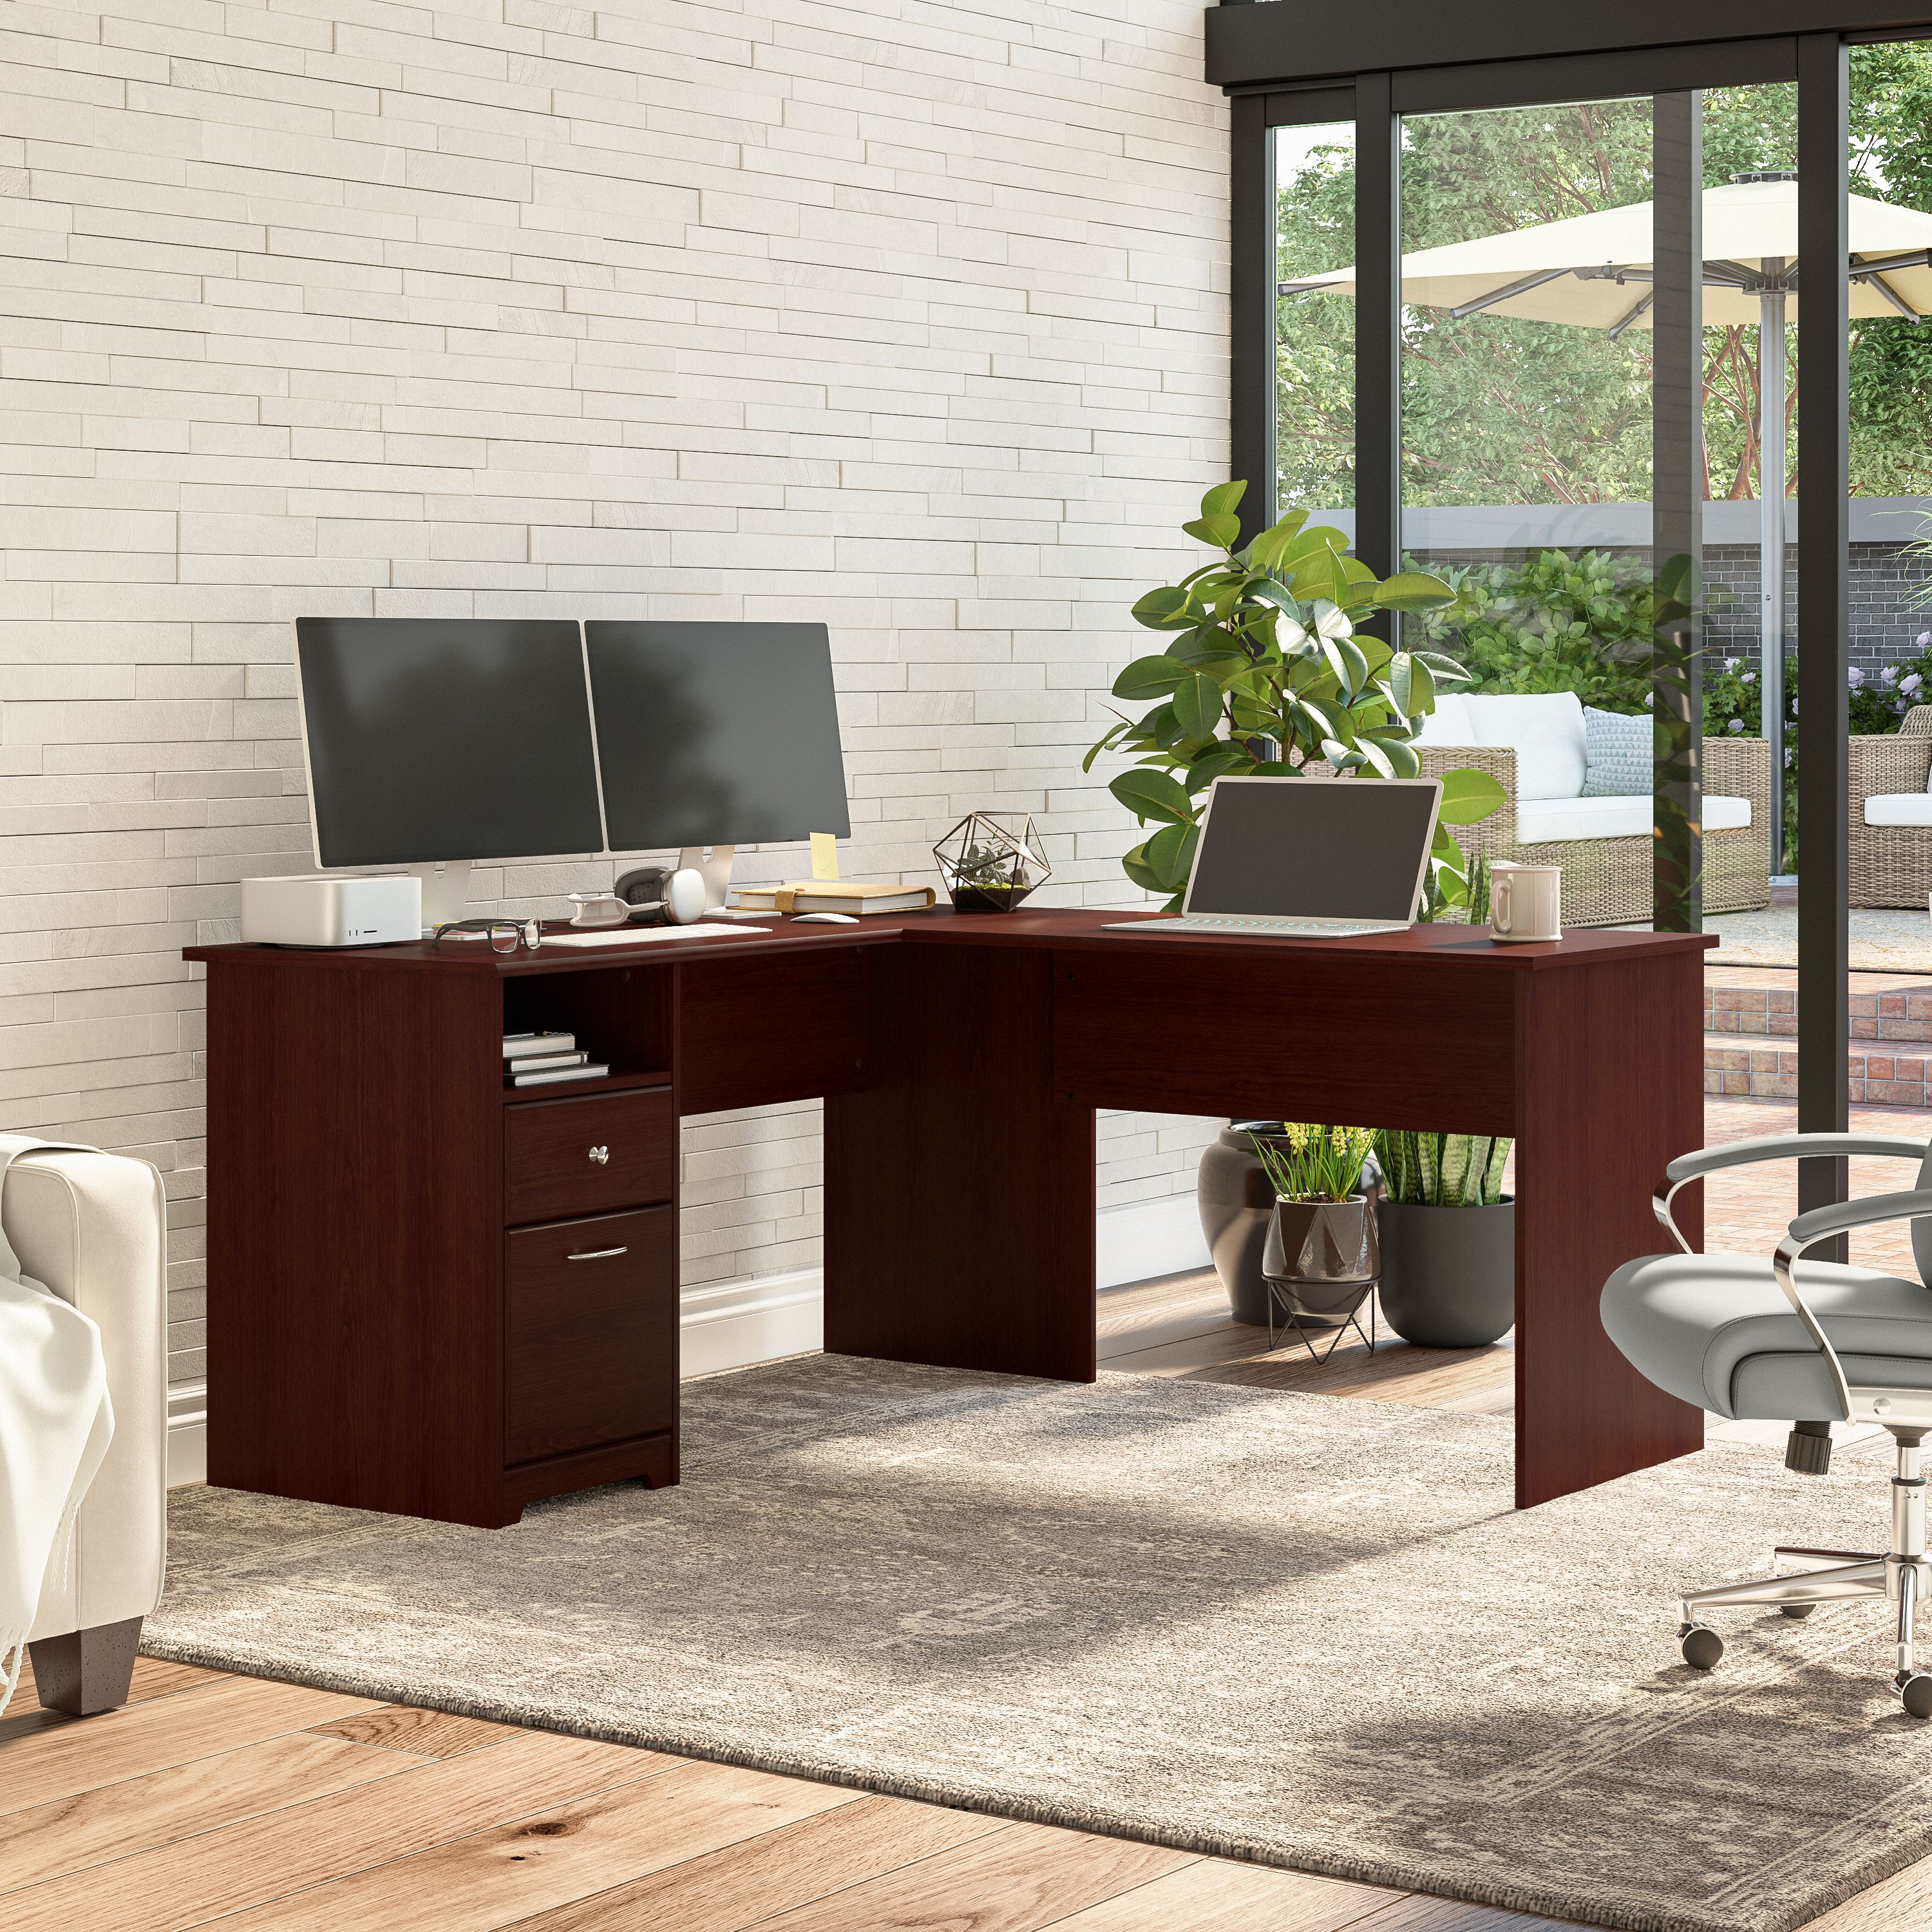 Shop Bush Furniture Cabot 60W L Shaped Computer Desk with Drawers 01 CAB044HVC #color_harvest cherry